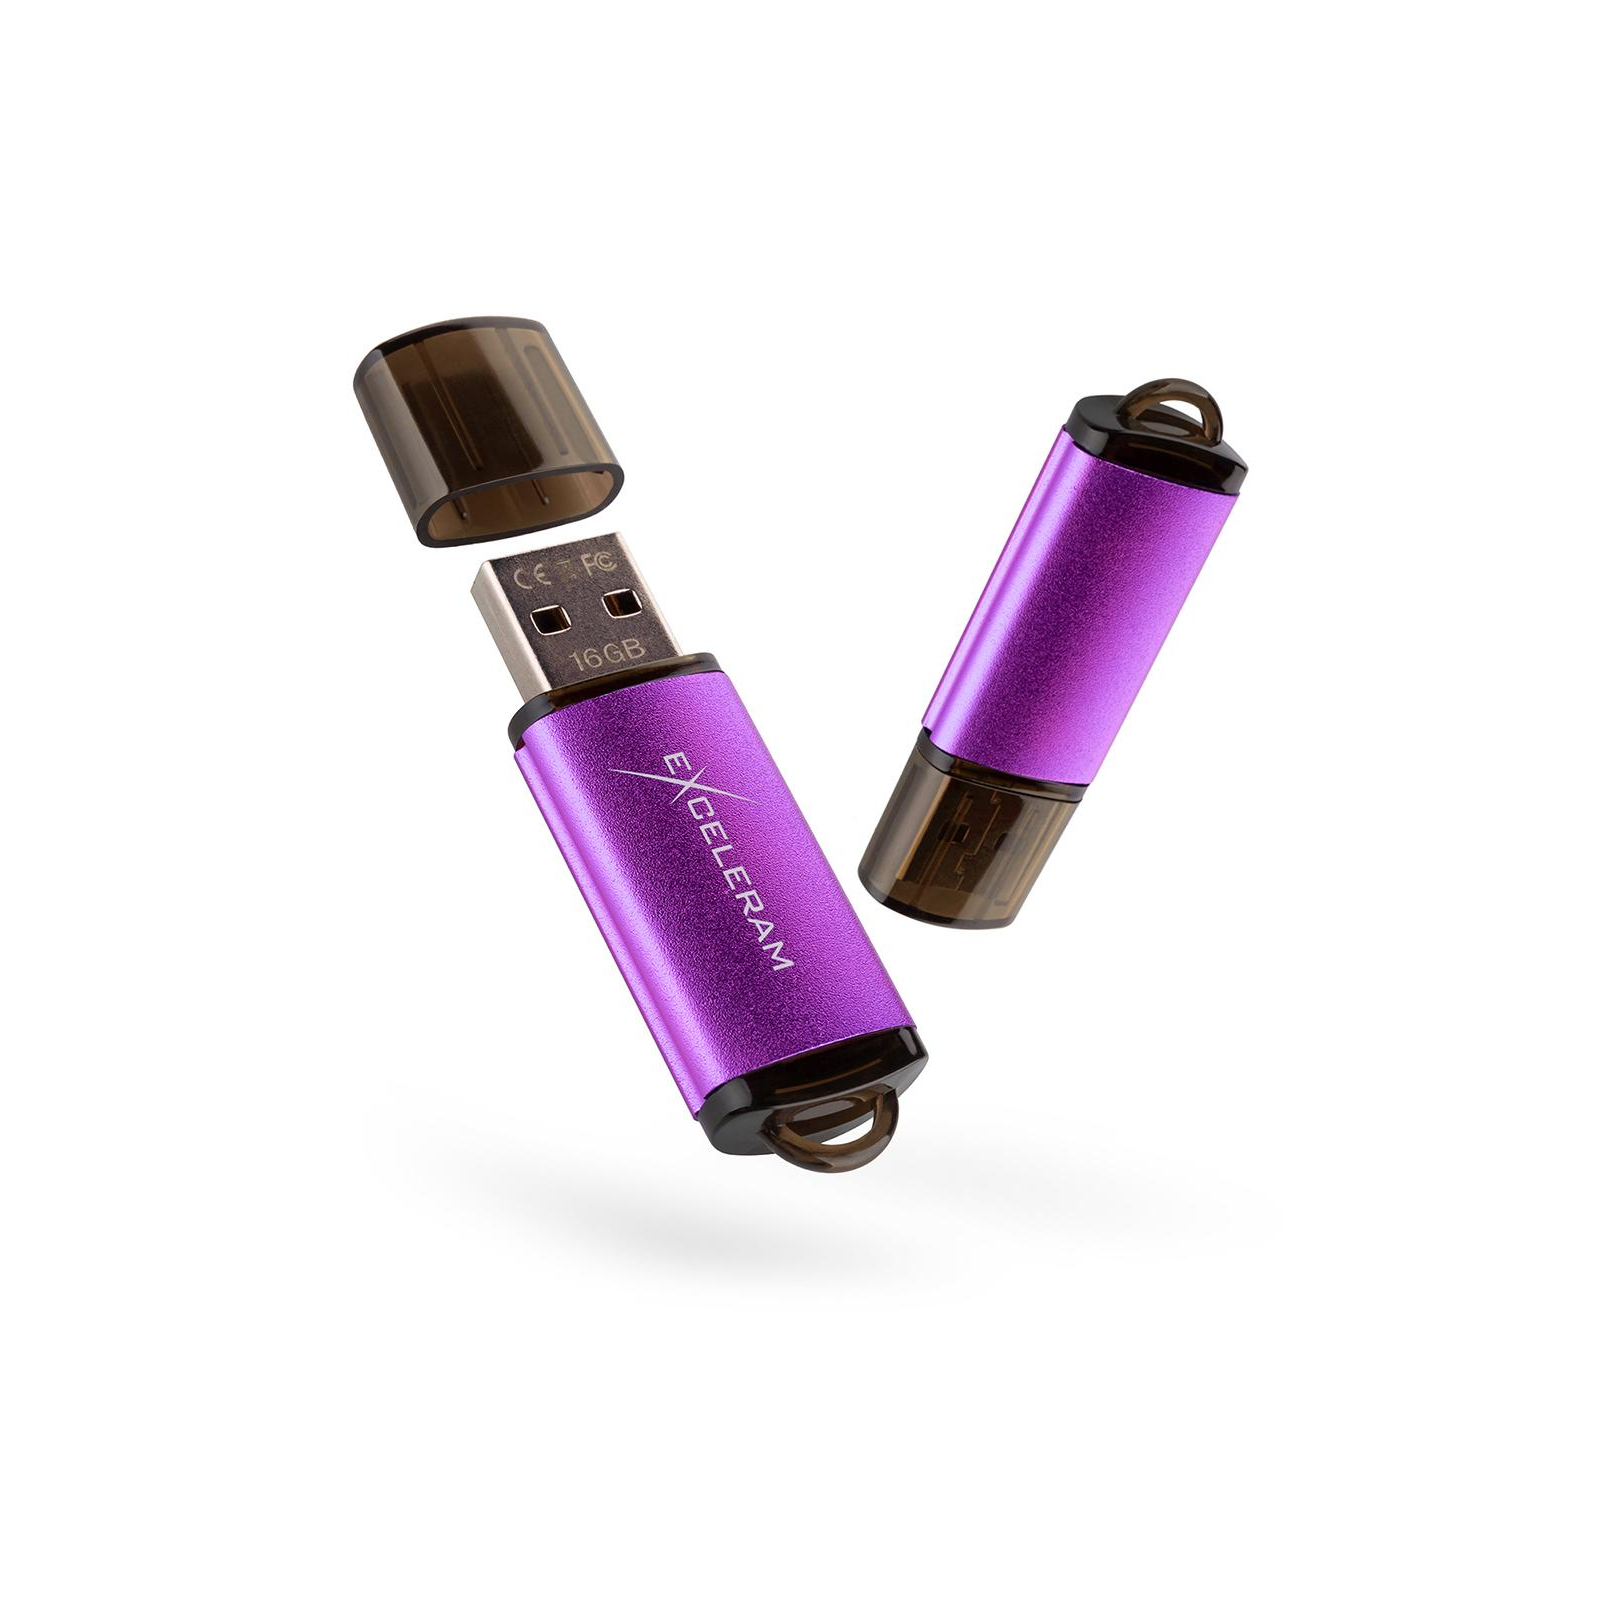 USB флеш накопитель eXceleram 32GB A3 Series Purple USB 3.1 Gen 1 (EXA3U3PU32)